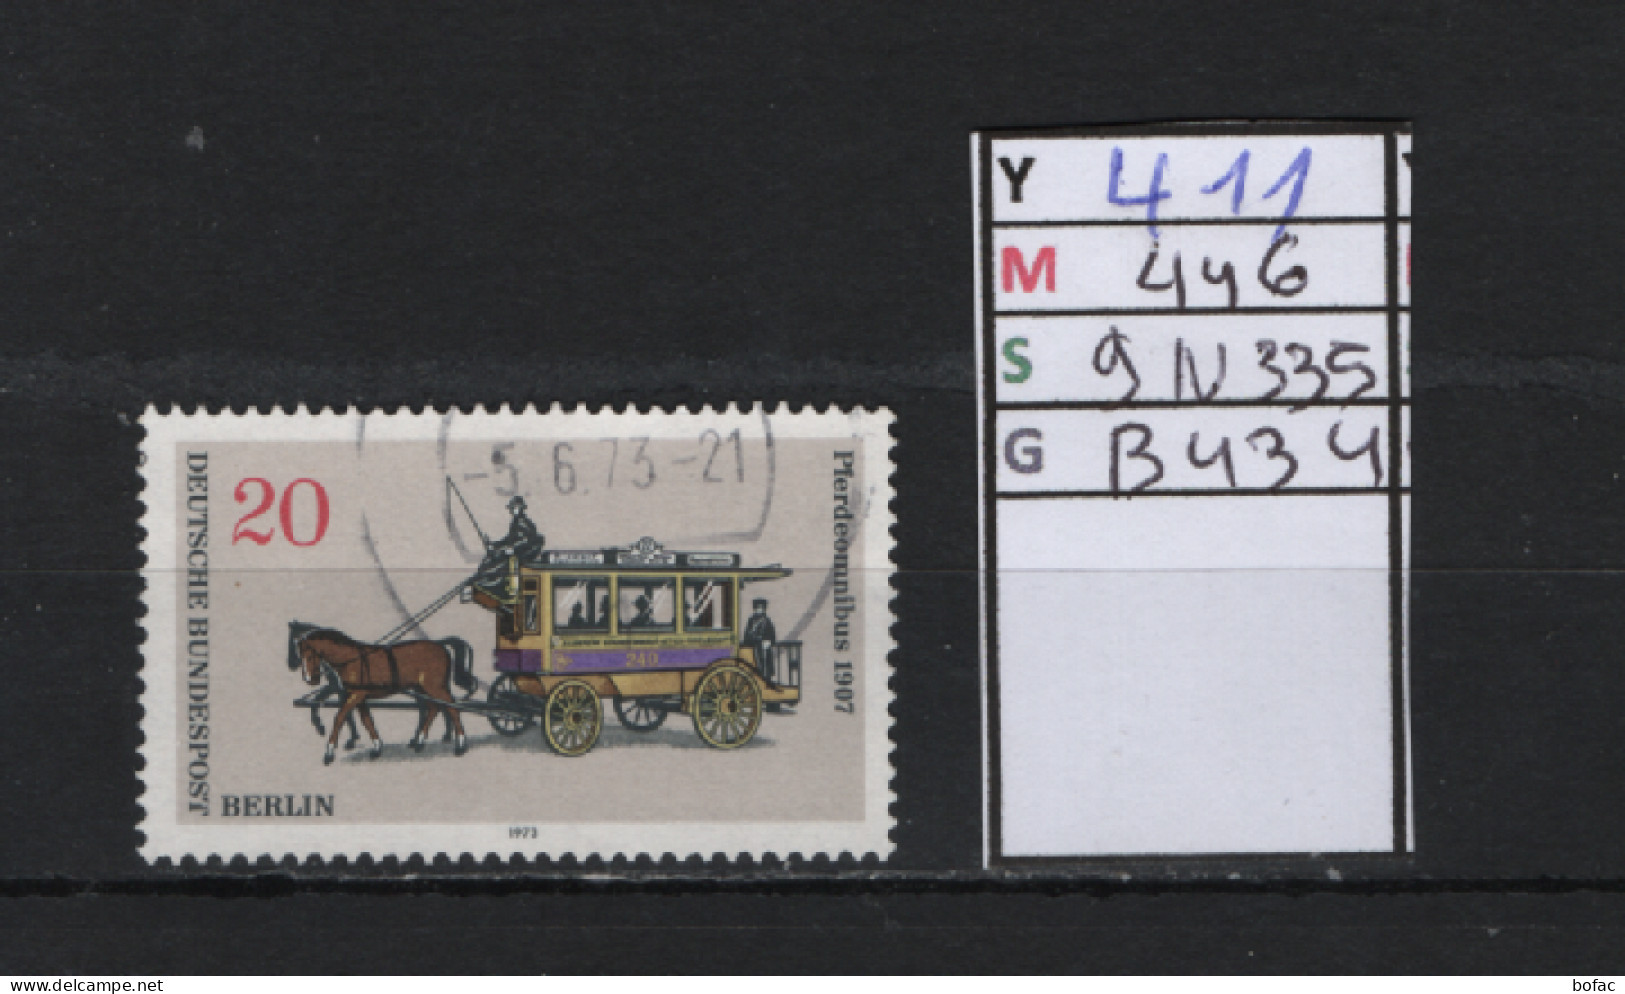 P. FIXE Obl 411 YT 446 MIC 9N335 SCO B434 GIB Hippomobile Transports Berlinois 1973 *Berlin* 75/03 - Used Stamps